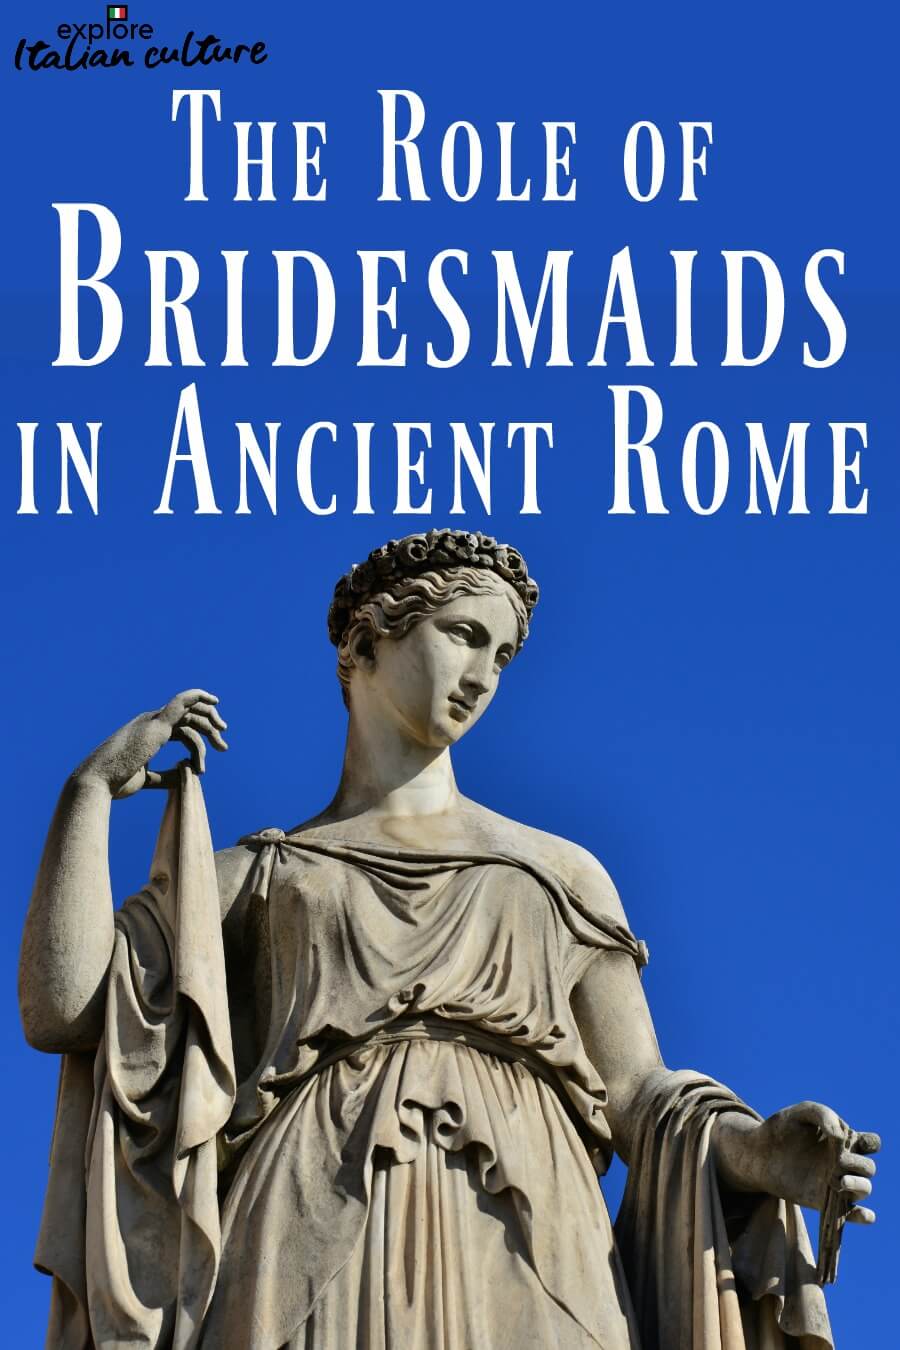 Bridesmaid duties in ancient Roman and modern Italian